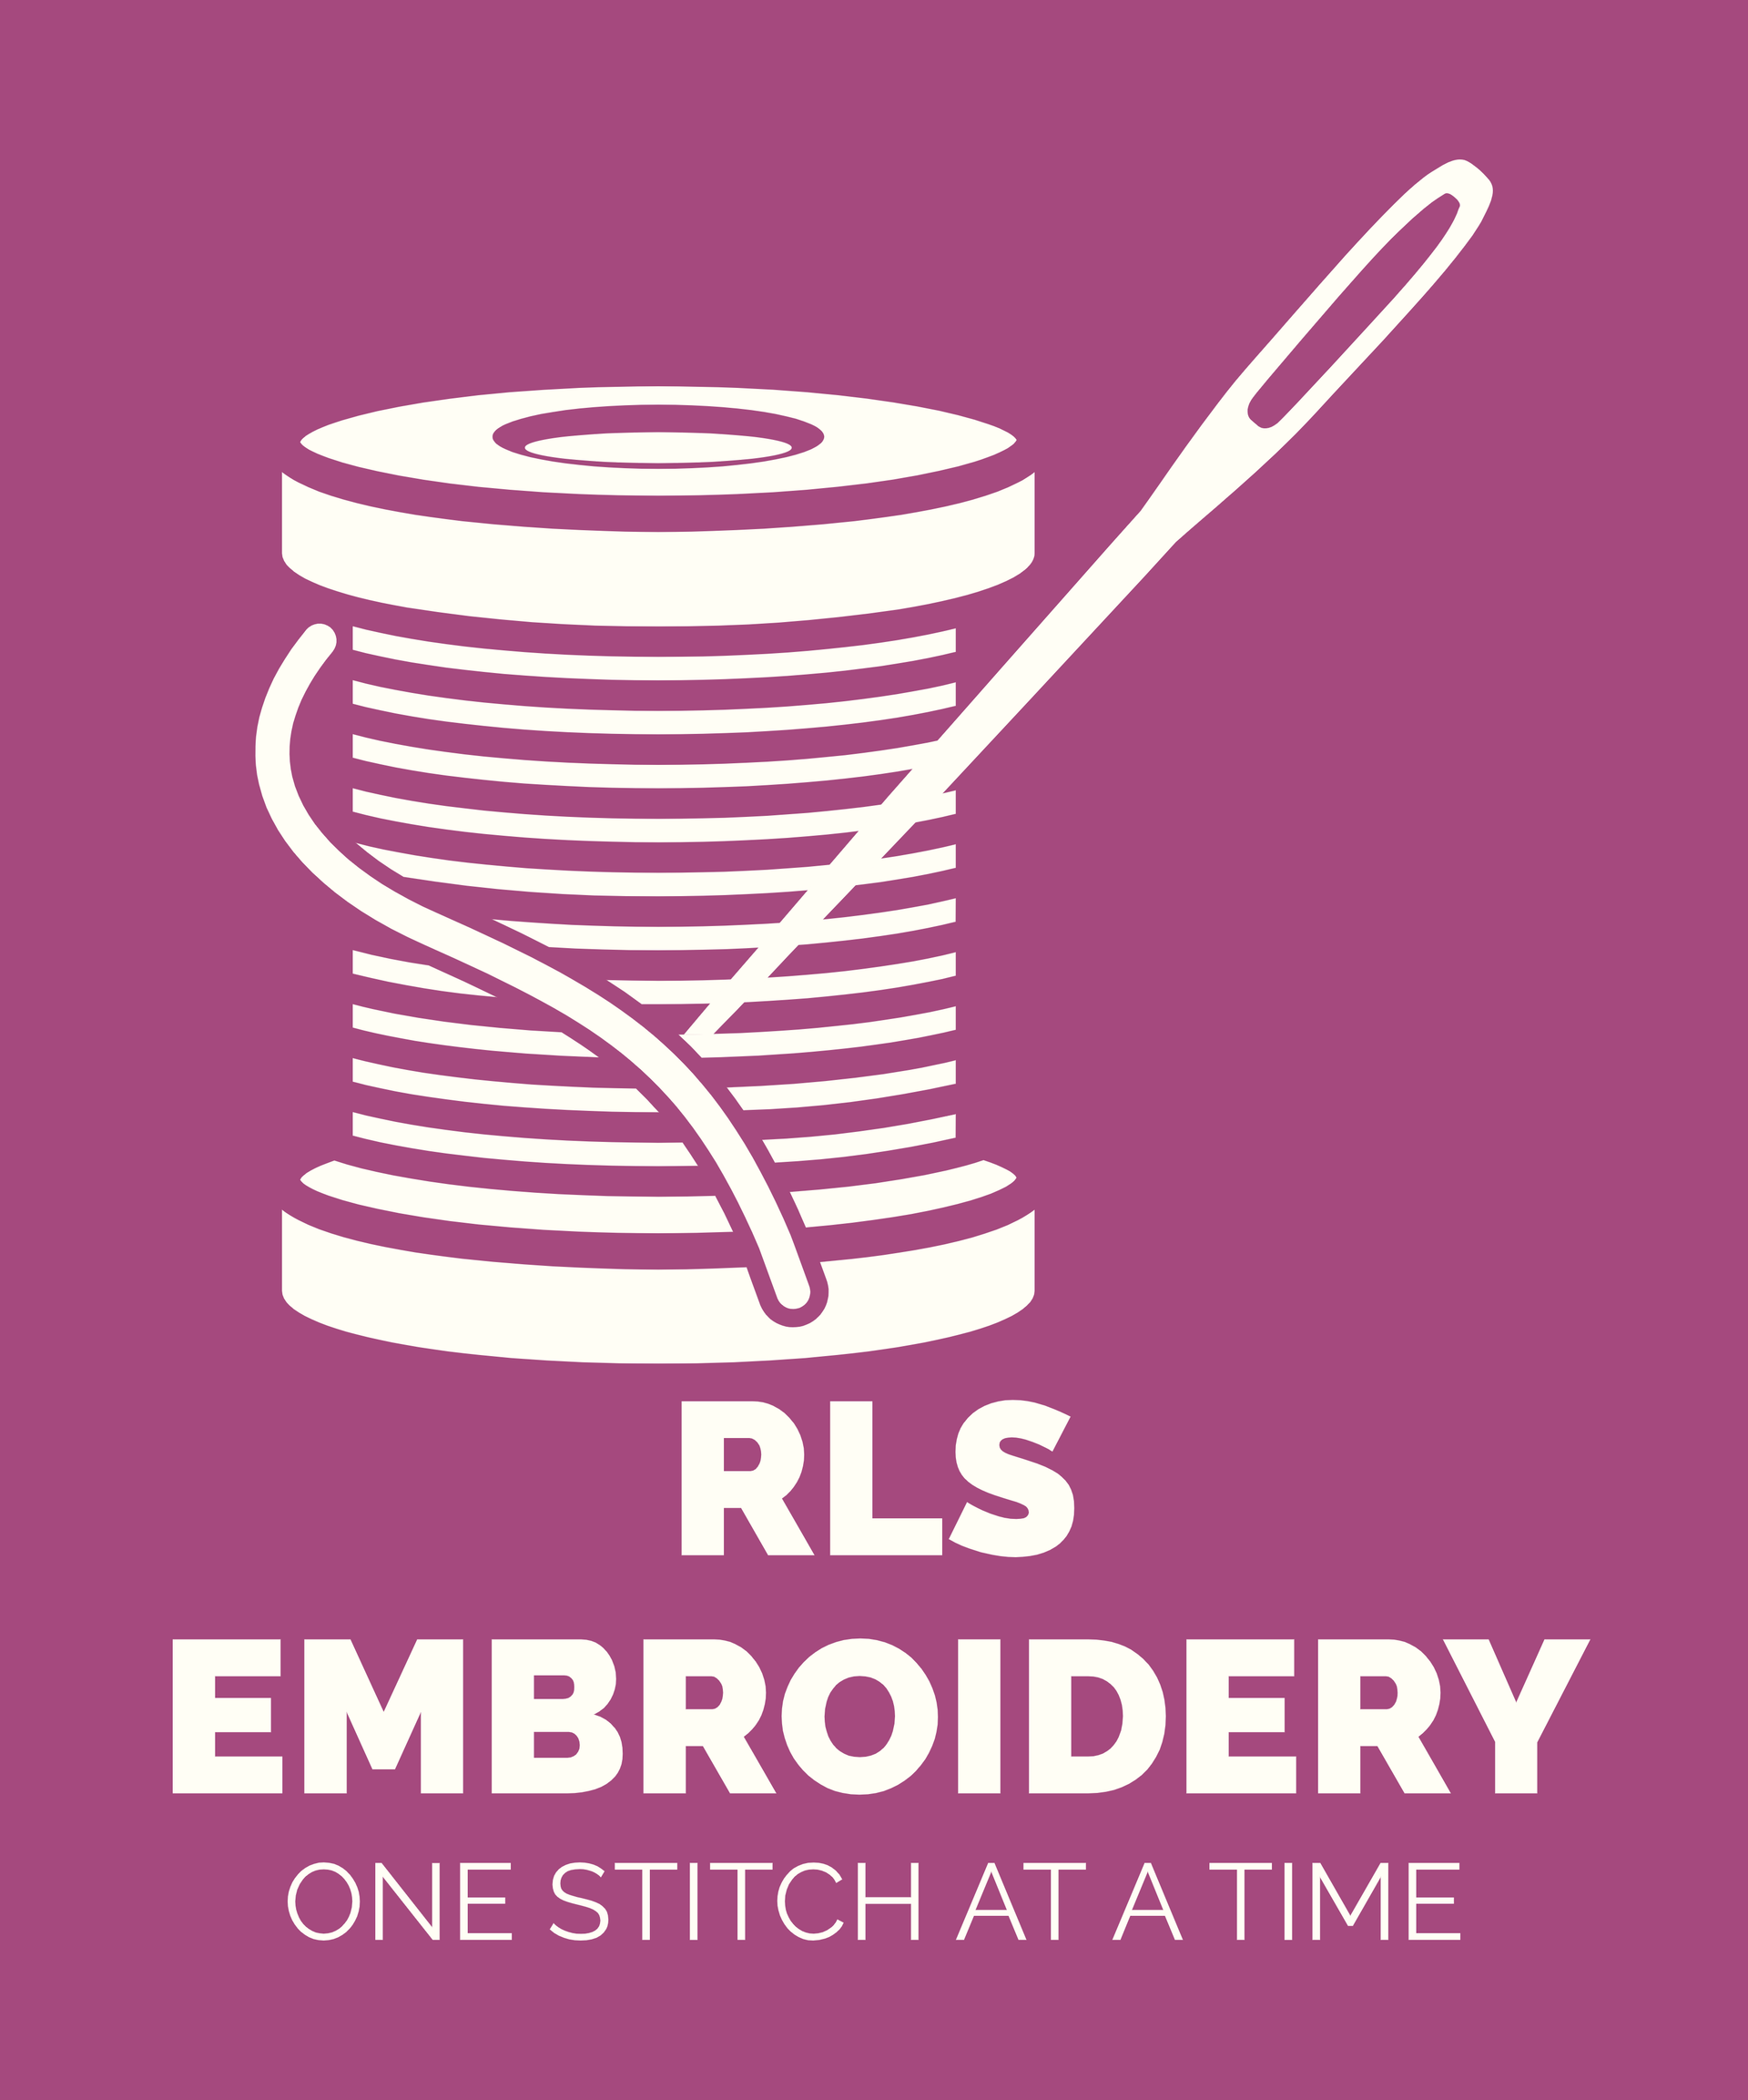 RLS Embroidery